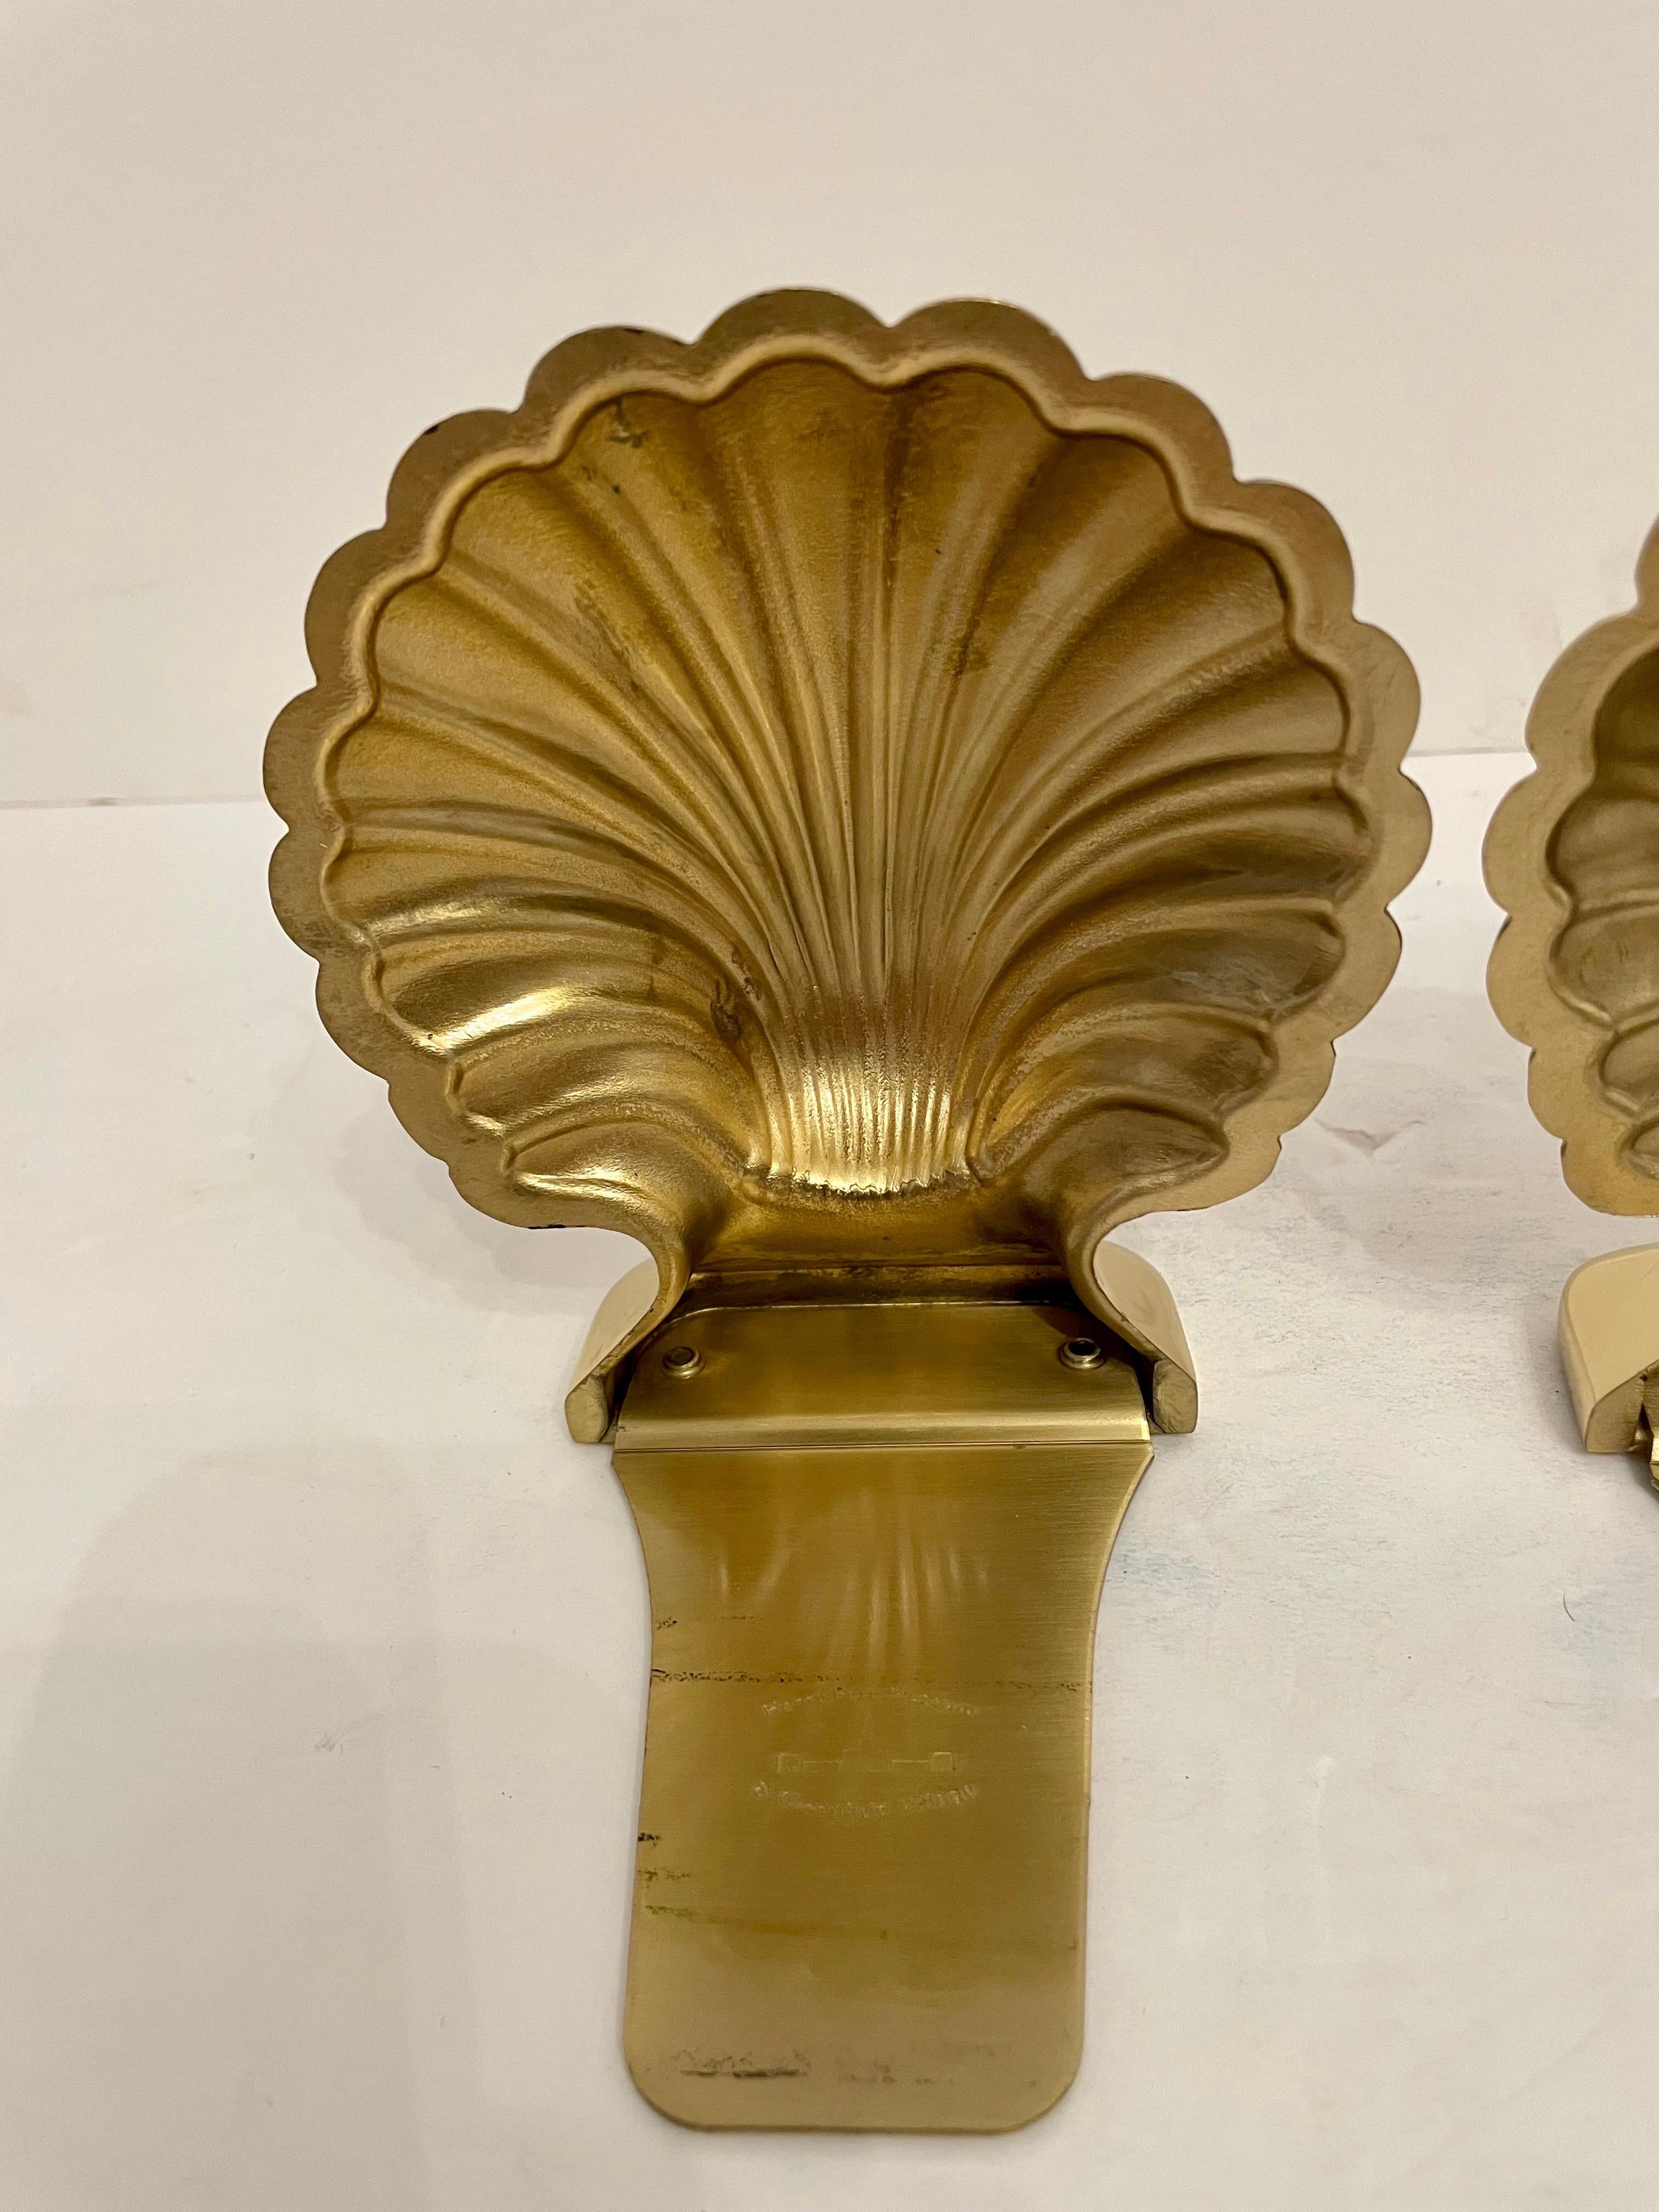 Korean Pair of Baldwin Brass Scallop Shell Seashell Bookends